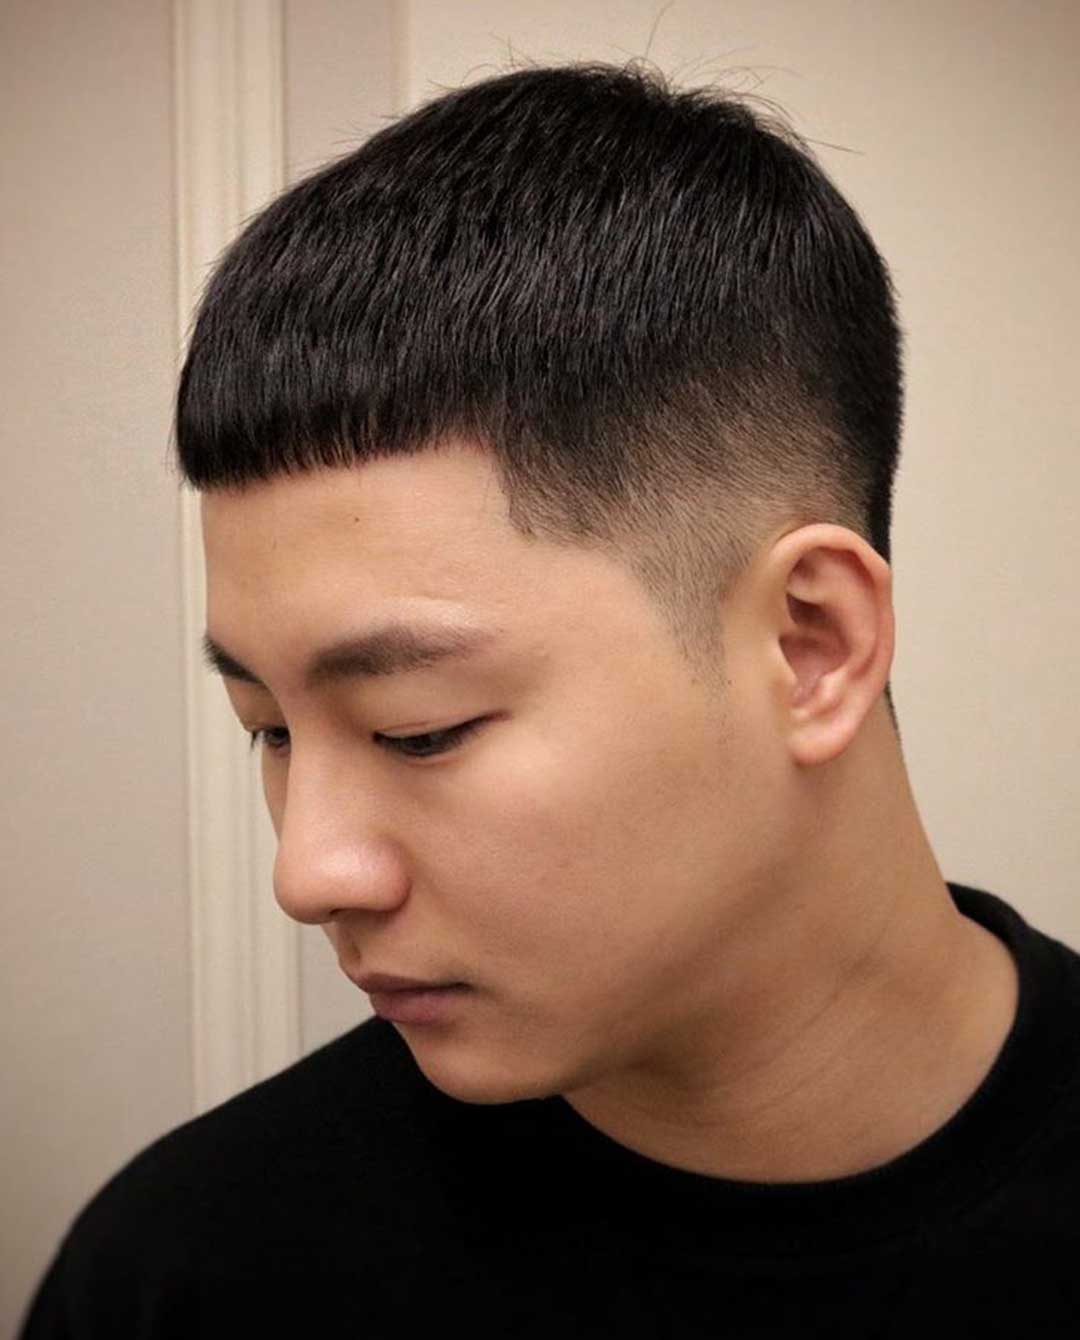 20+ Best Korean Men Haircut & Hairstyle Ideas - Men's Hairstyle Tips